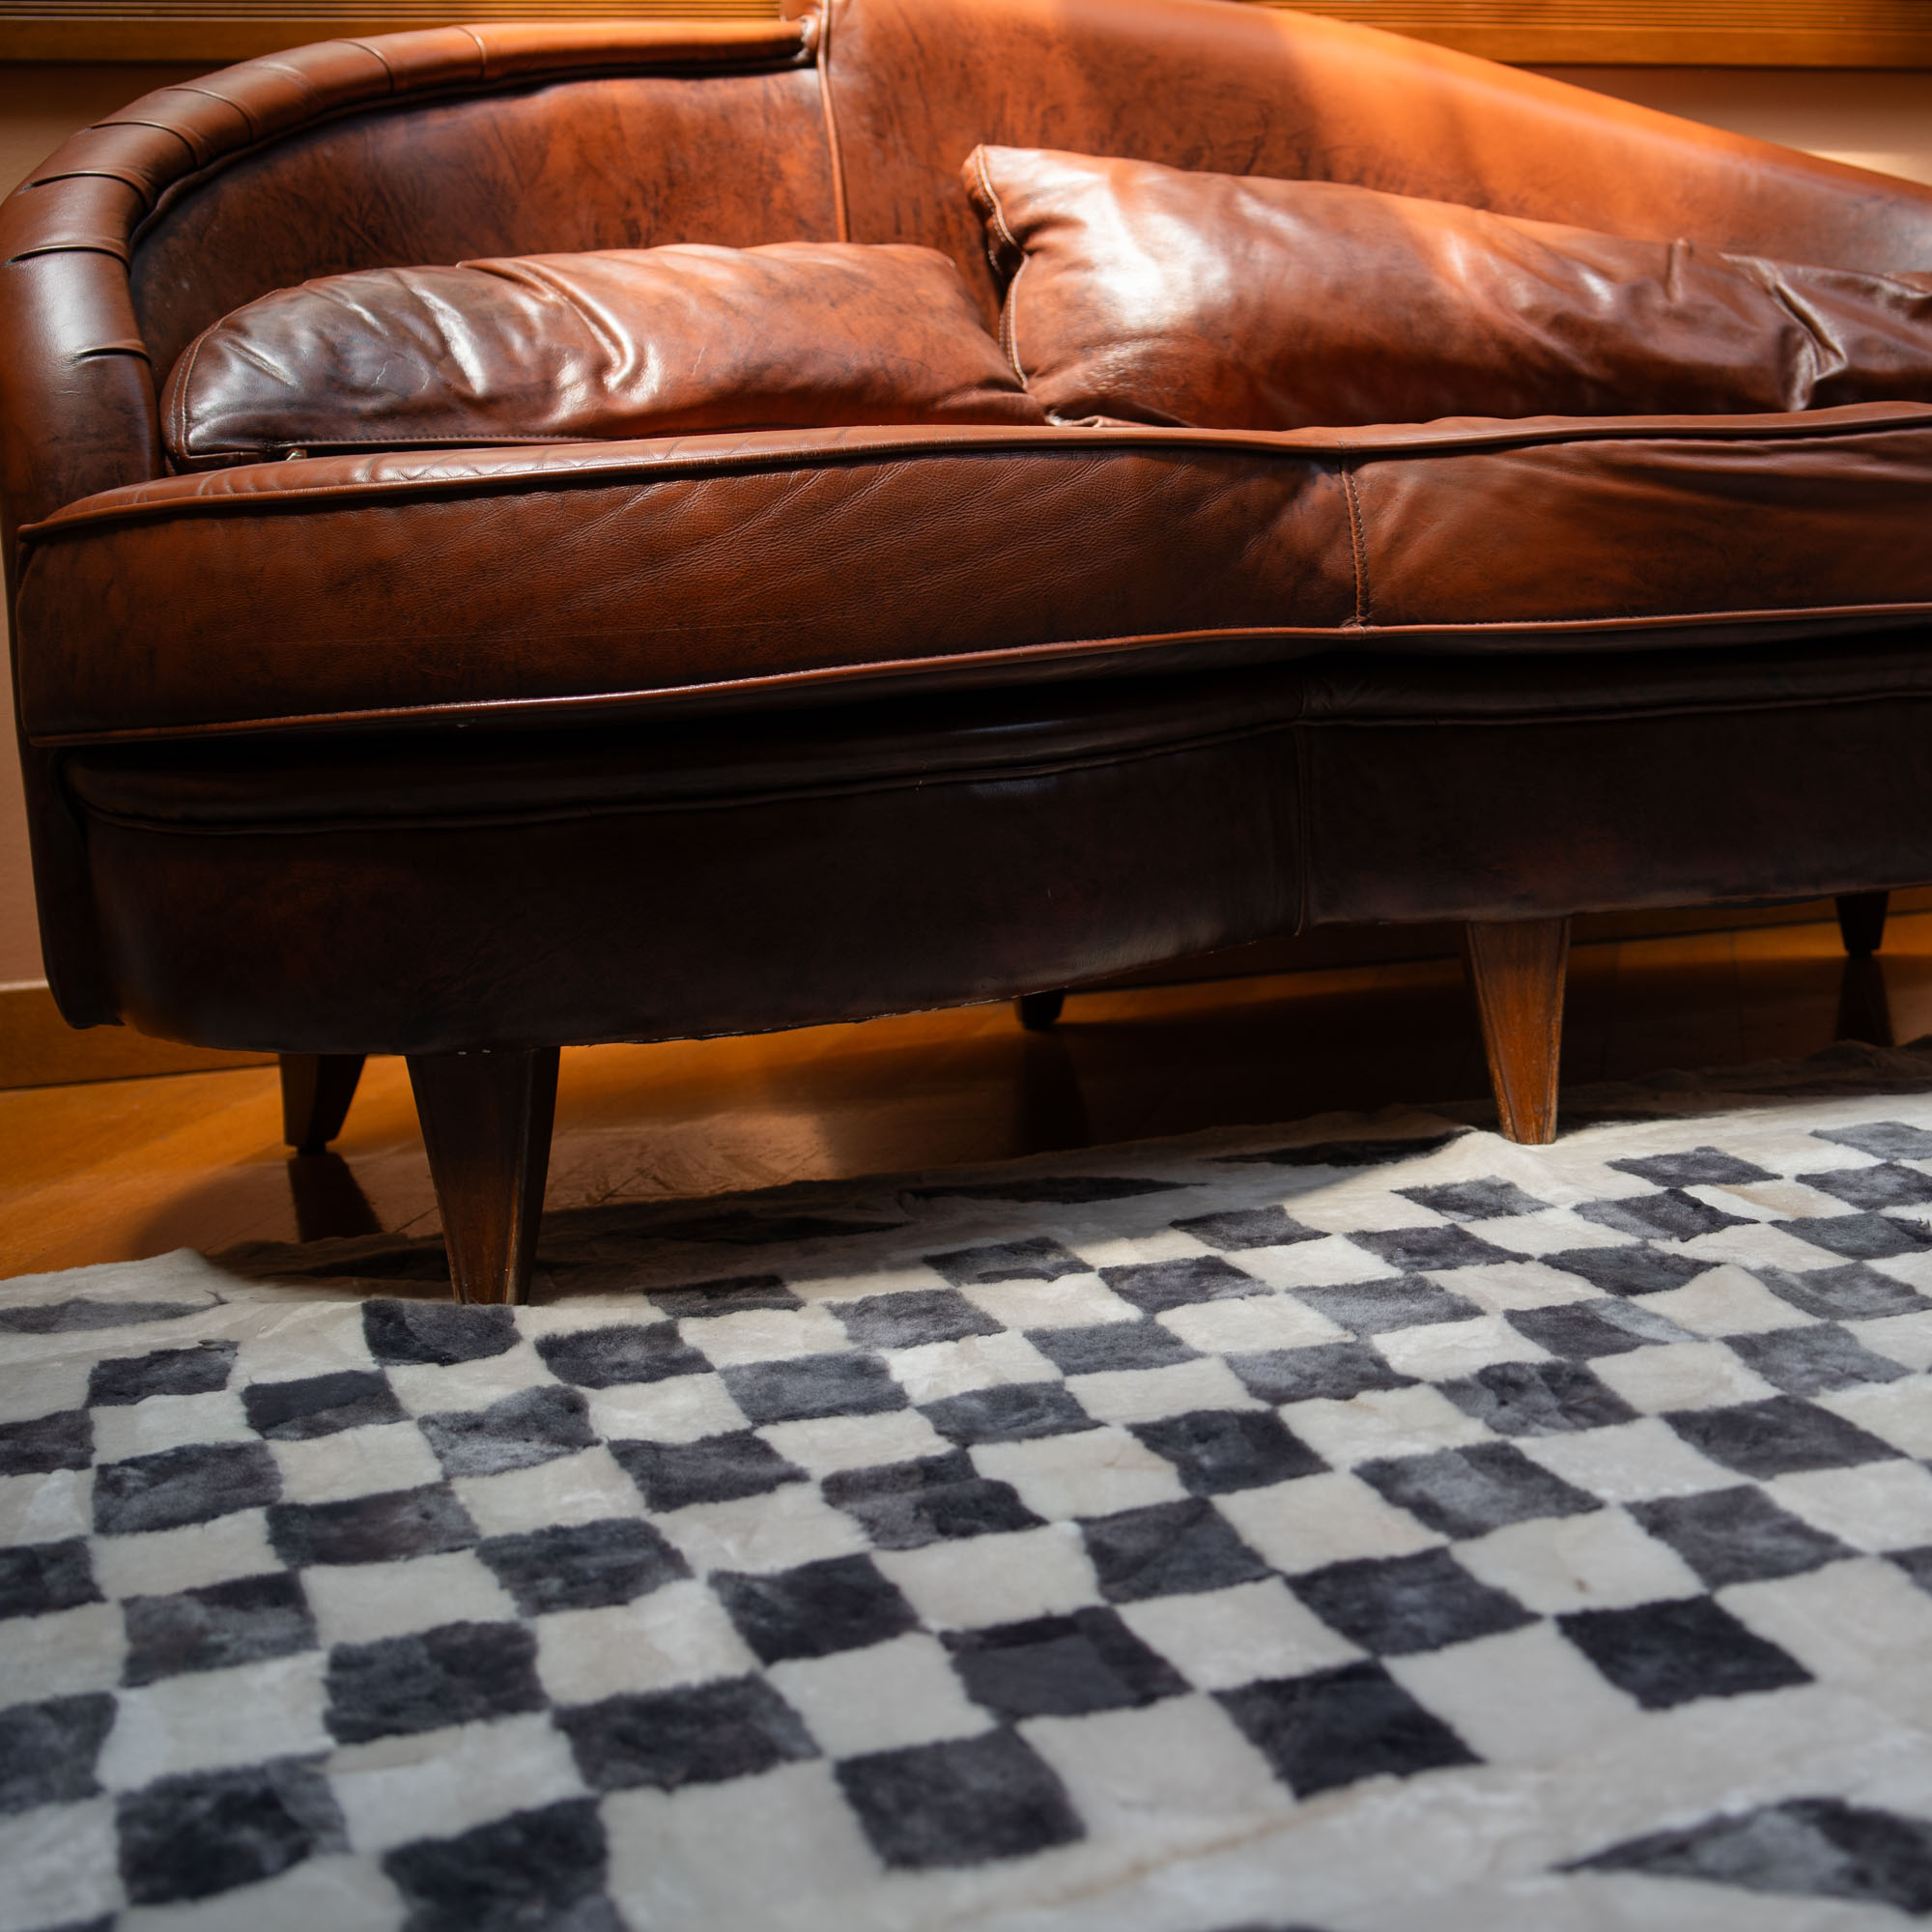 Sheep fur carpet in a gray chess pattern